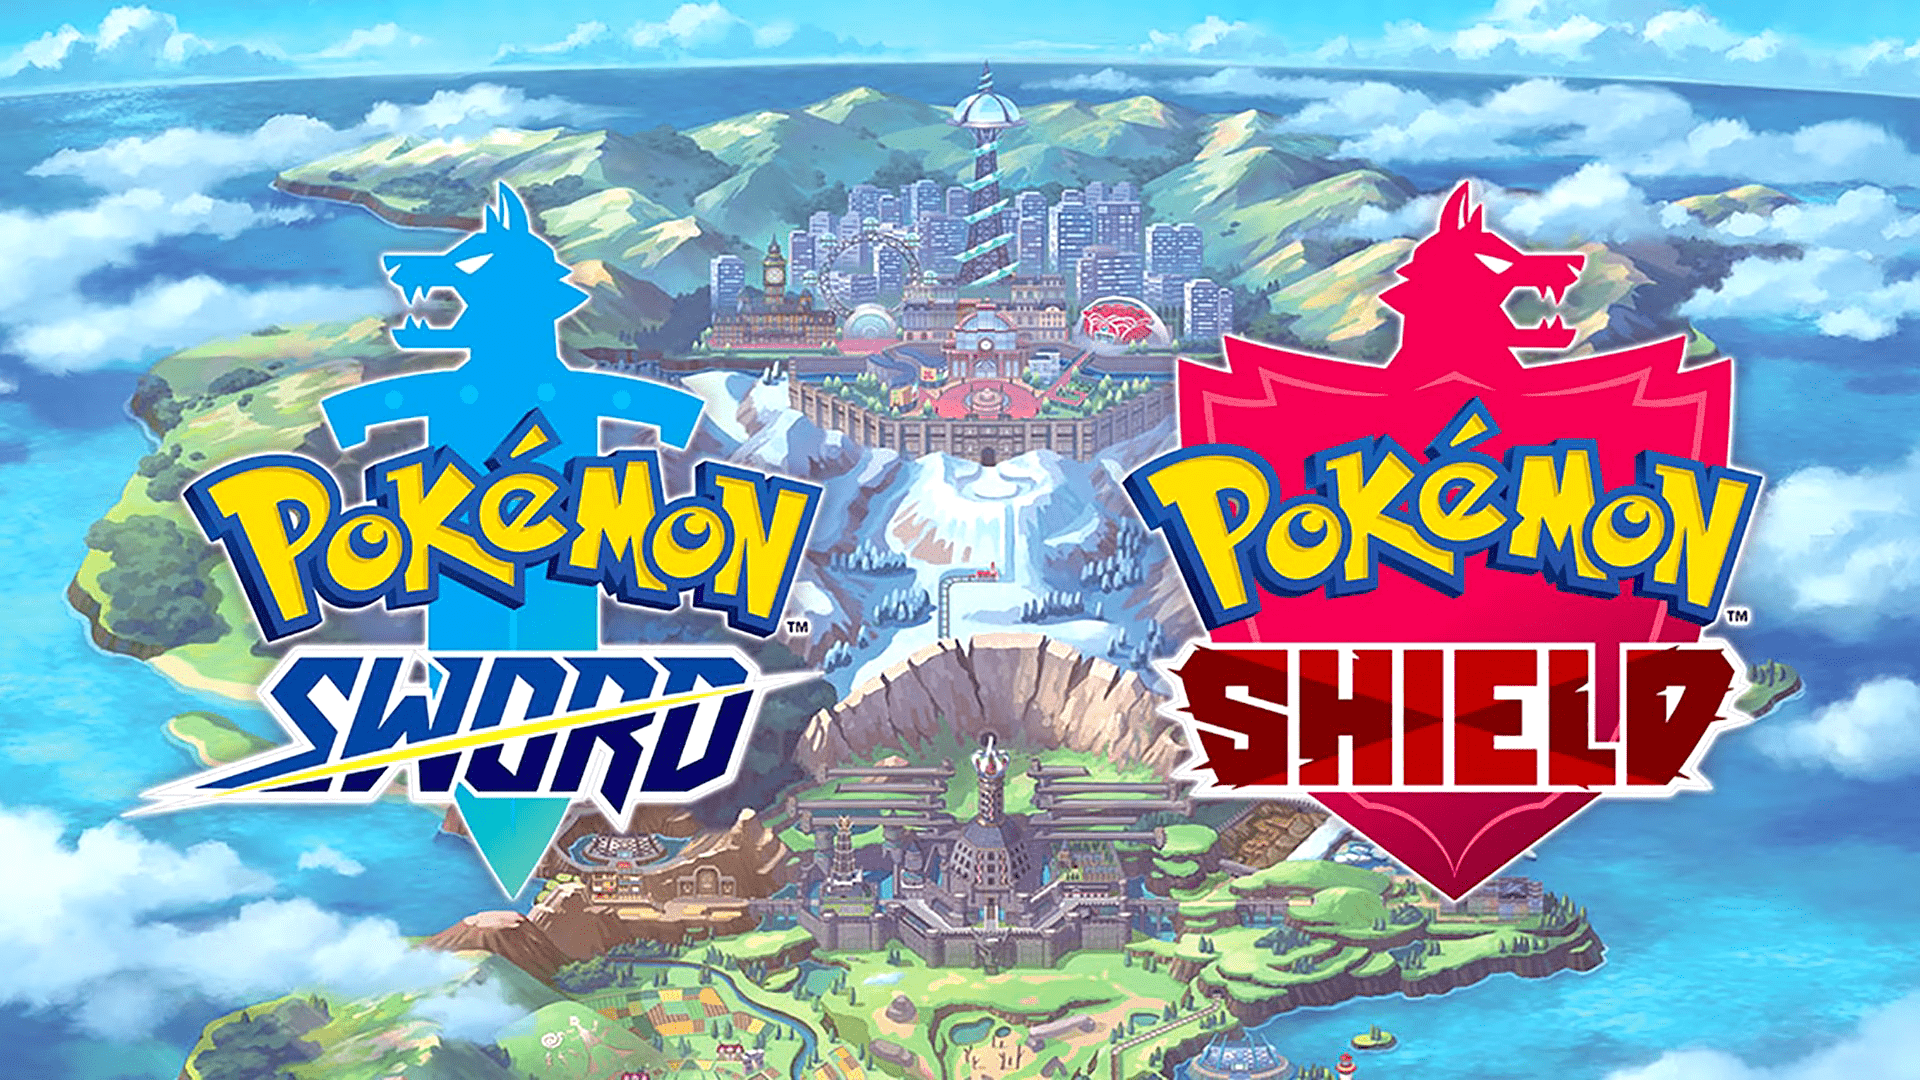 Pokemon Sword And Shield Predictions For Nintendo Direct